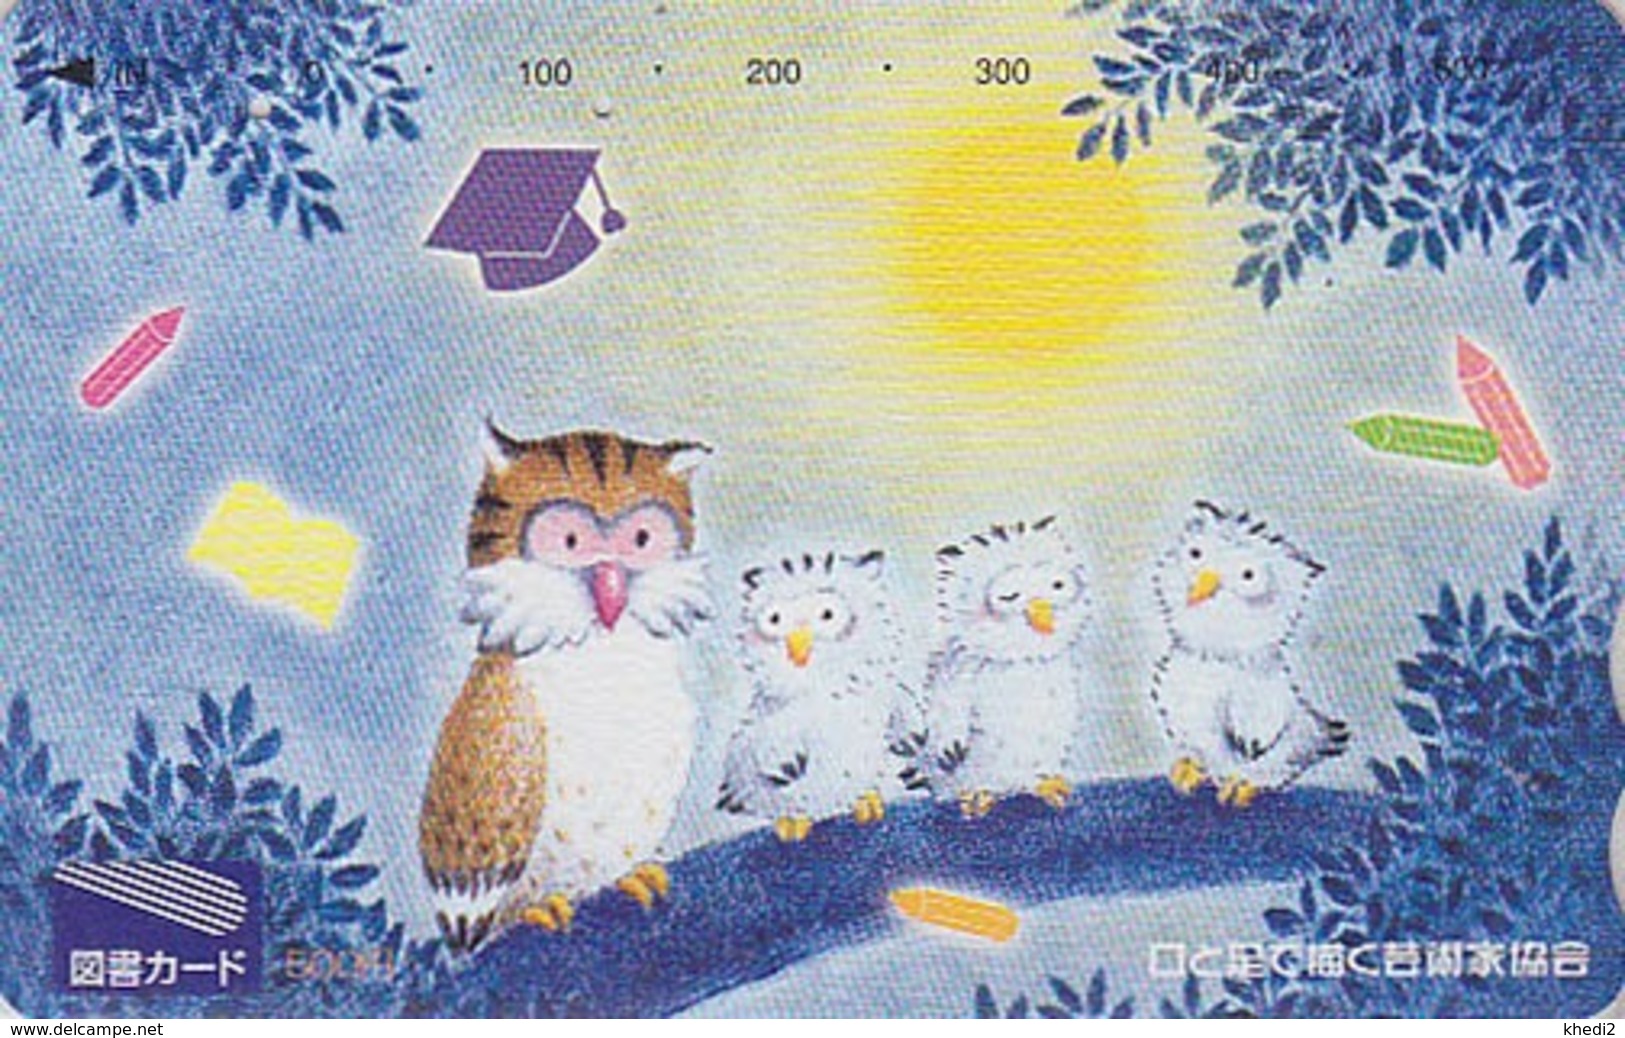 Carte Prépayée Japon - ANIMAL - OISEAU - HIBOU Chouette & Soleil - OWL BIRD & Sun  - Japan Prepaid Tosho Card - 4299 - Gufi E Civette